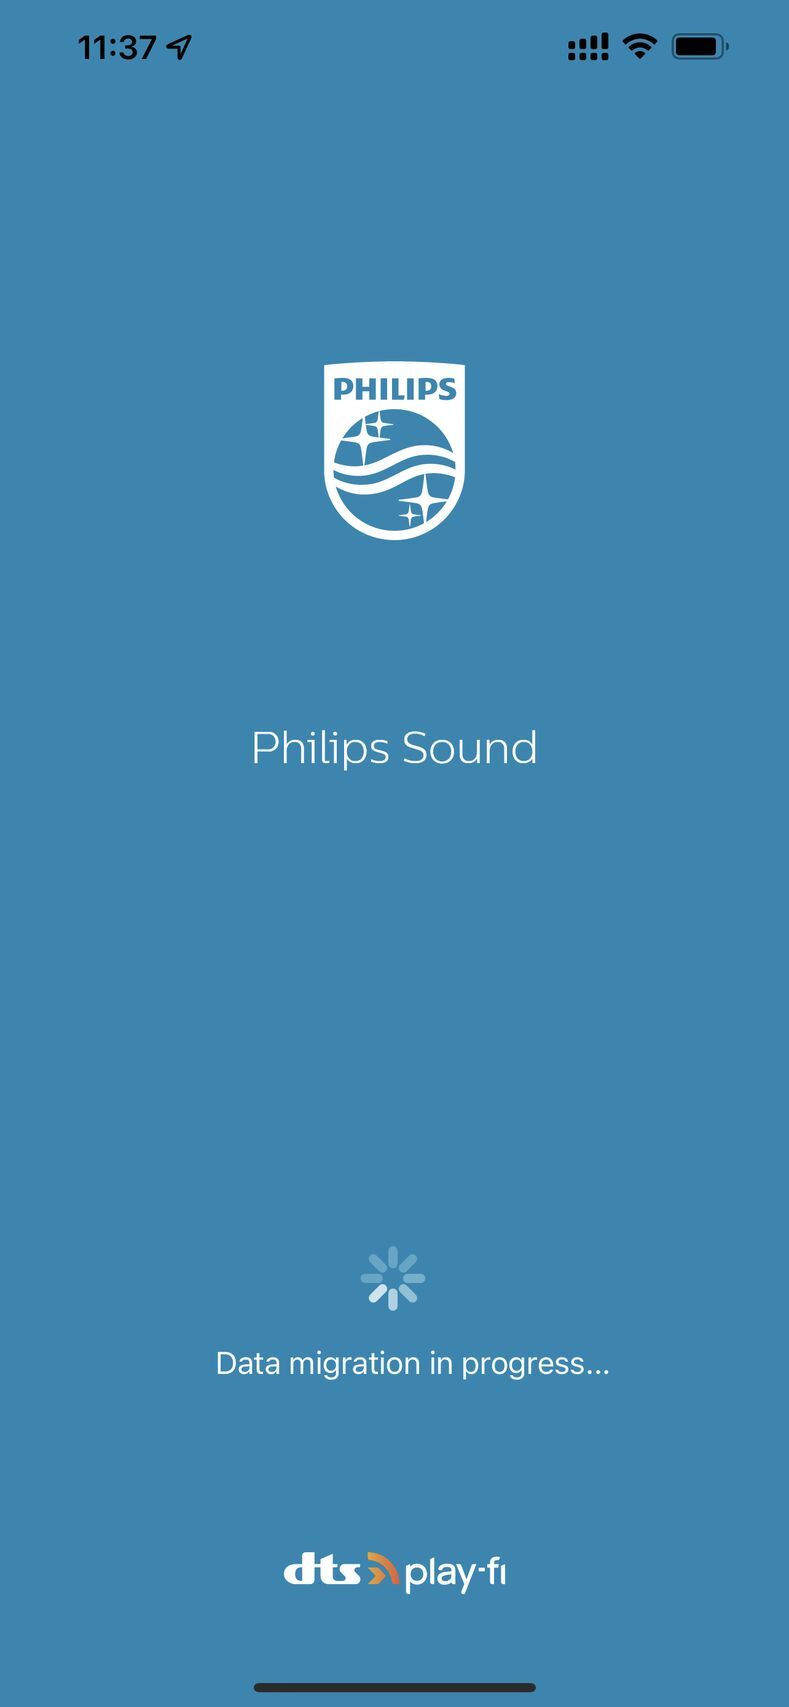 Philips Audio - DTS Play-Fi